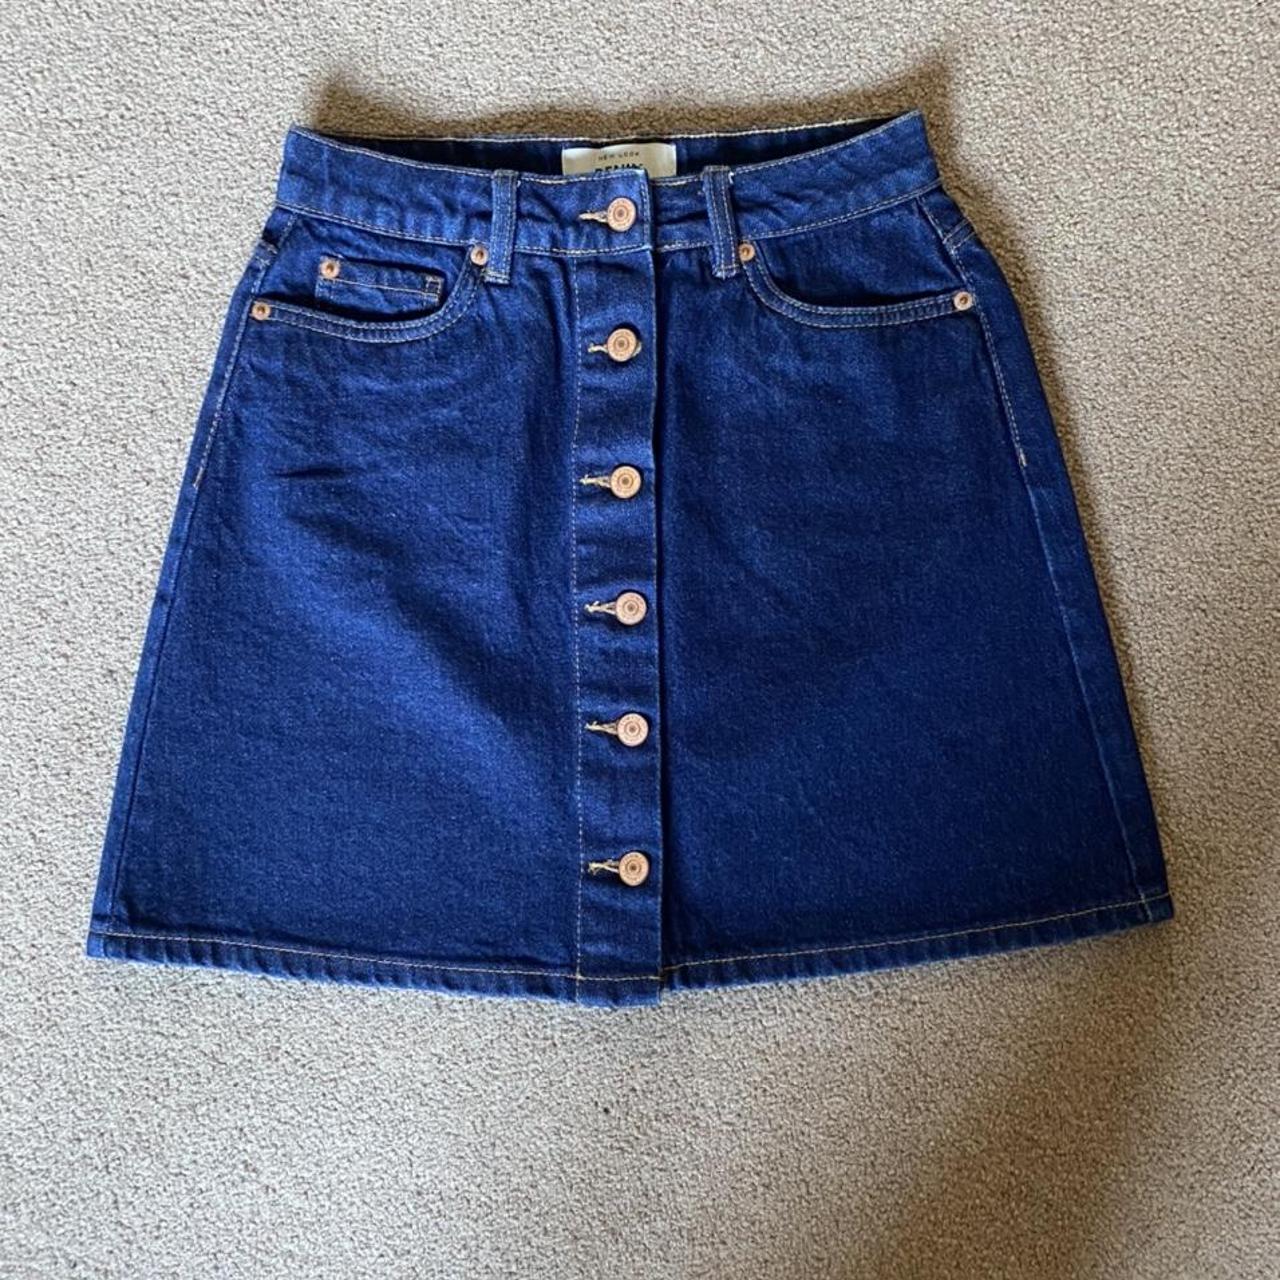 New Look Women's Blue and Navy Skirt | Depop